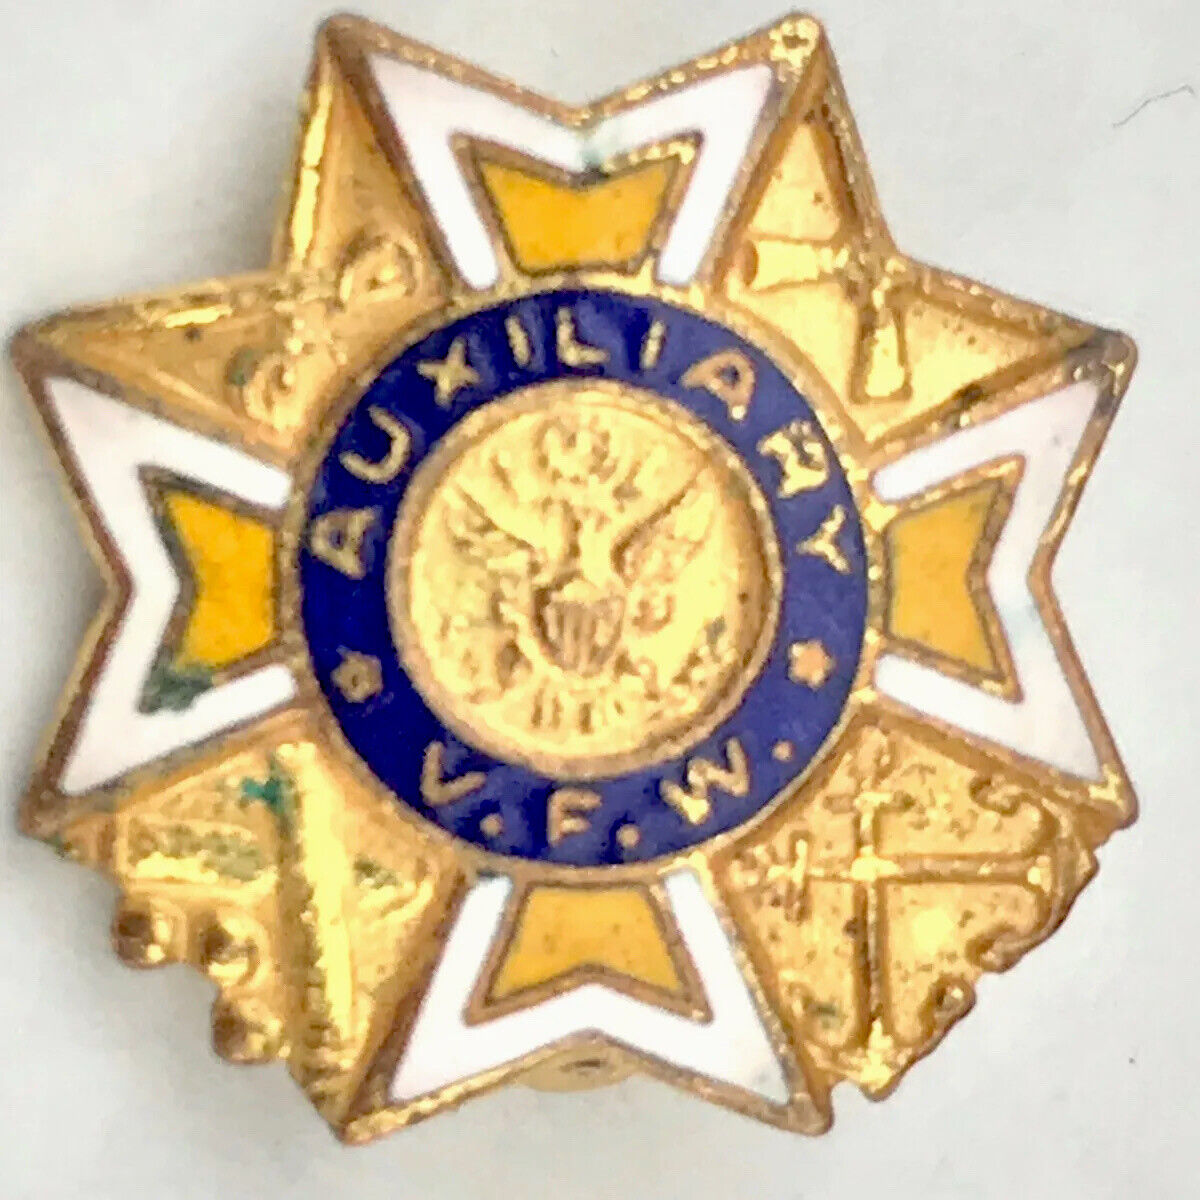 VFW Auxiliary Service Pin Vintage Gold Tone Enamel